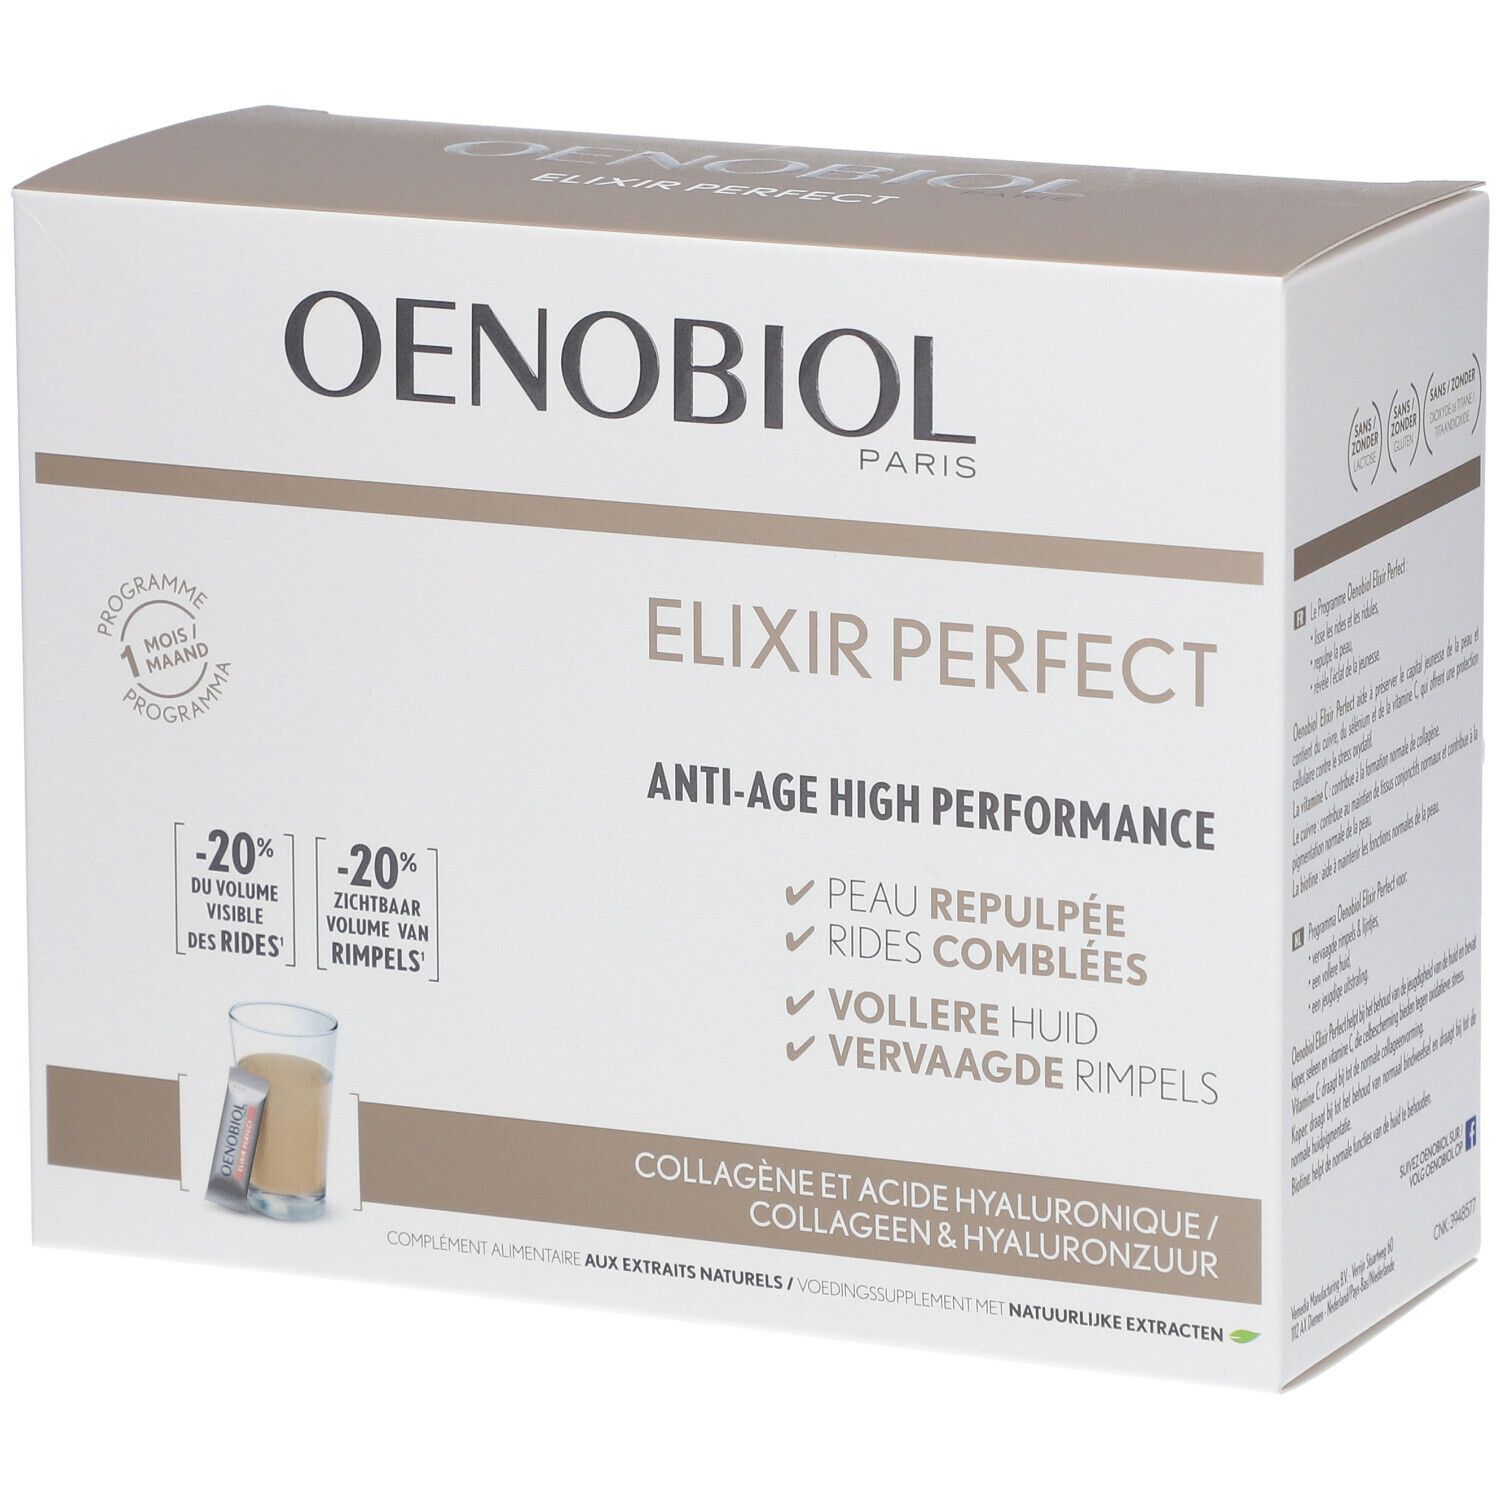 Oenobiol Elixir Perfect Shop Apothekech